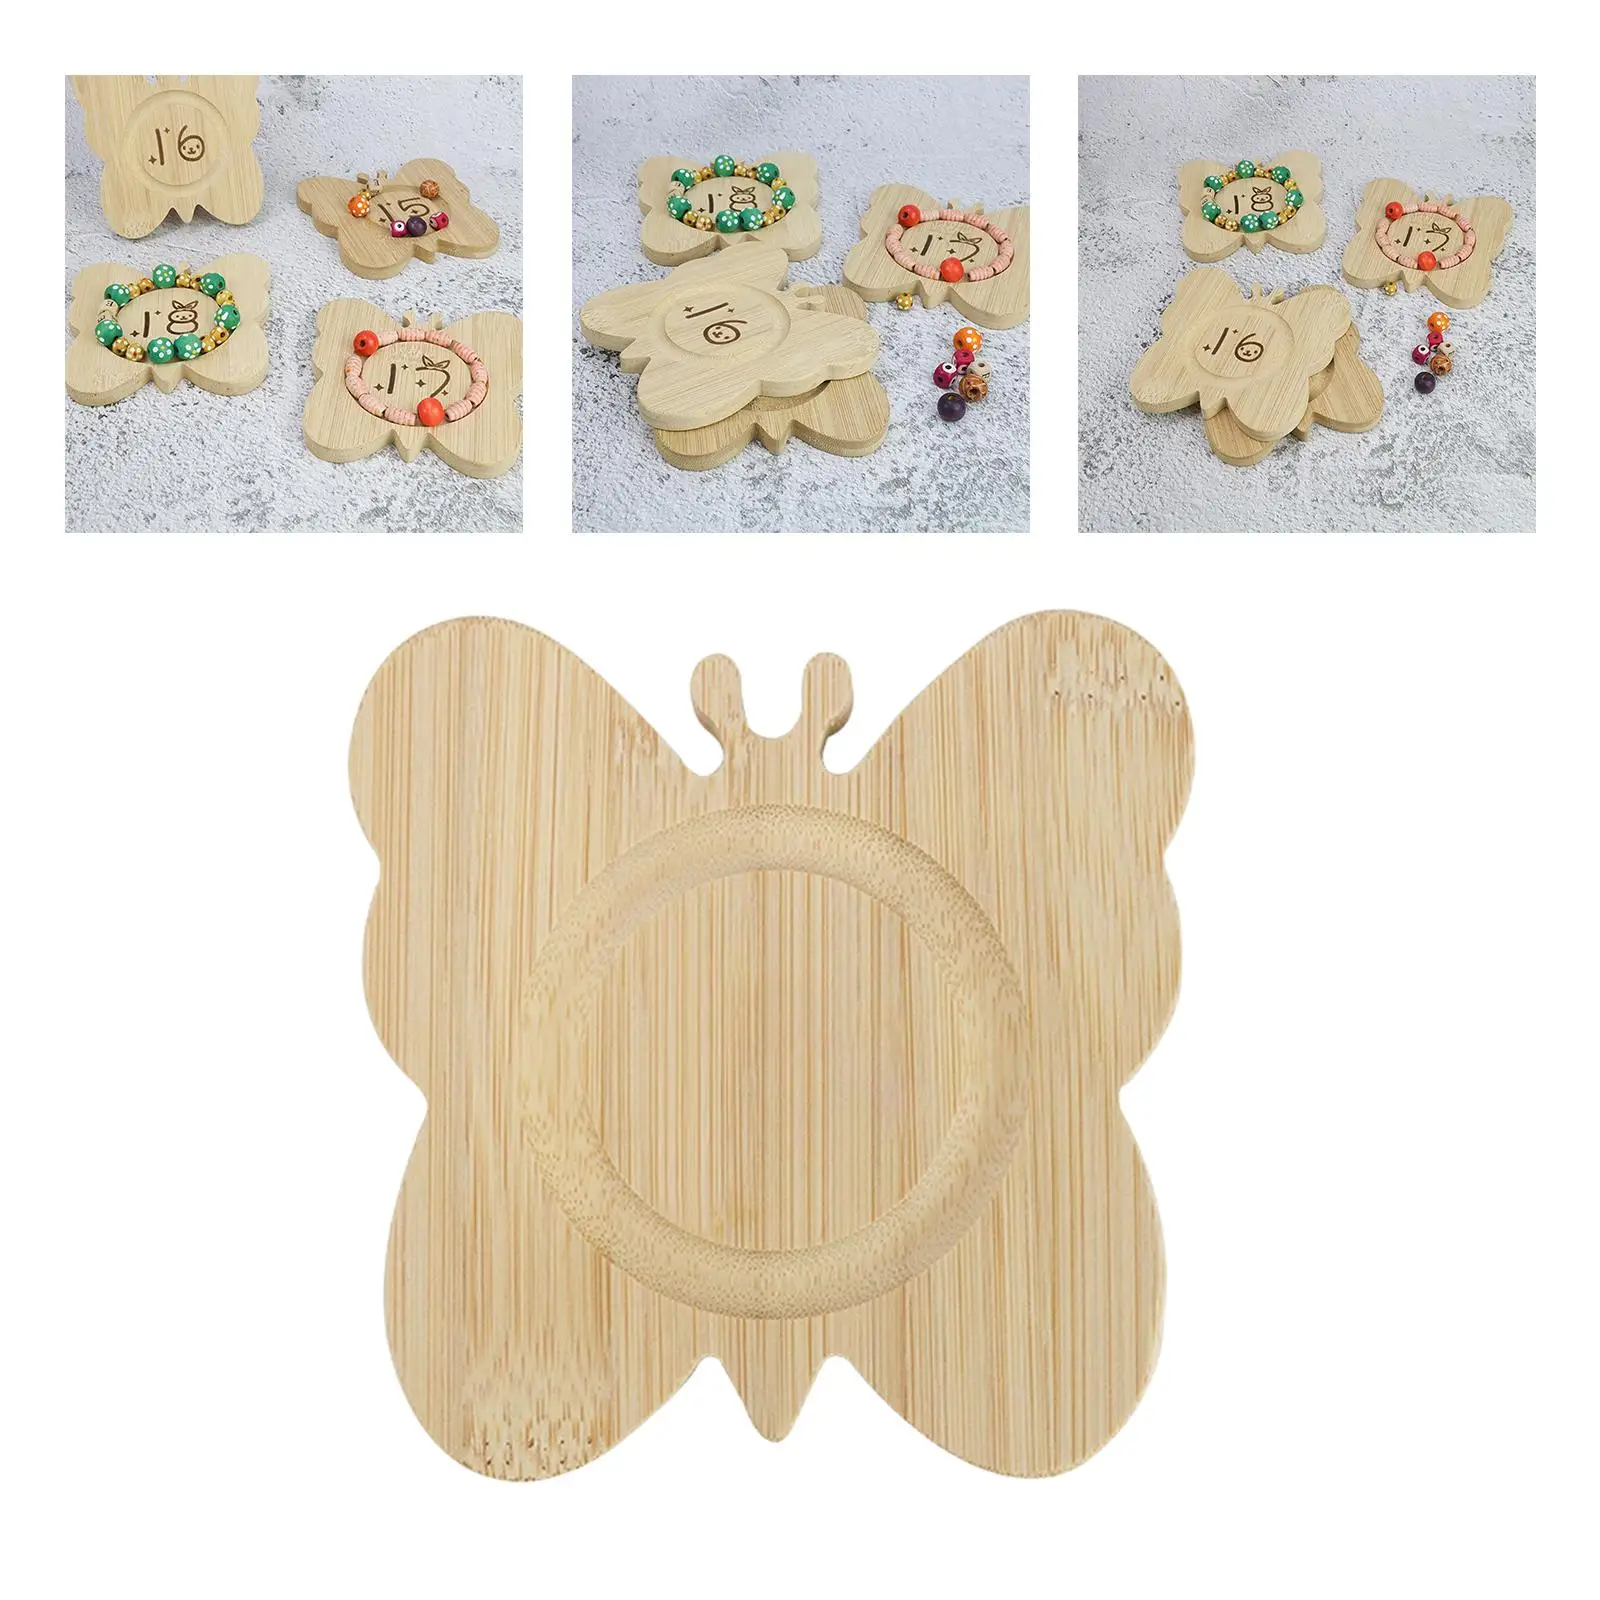 Wooden Show Organizer 12cm Jewelry Storage Butterfly Shaped Jewelry Tray Bracelet Holder Earrings Gift Bead Pendant Tray